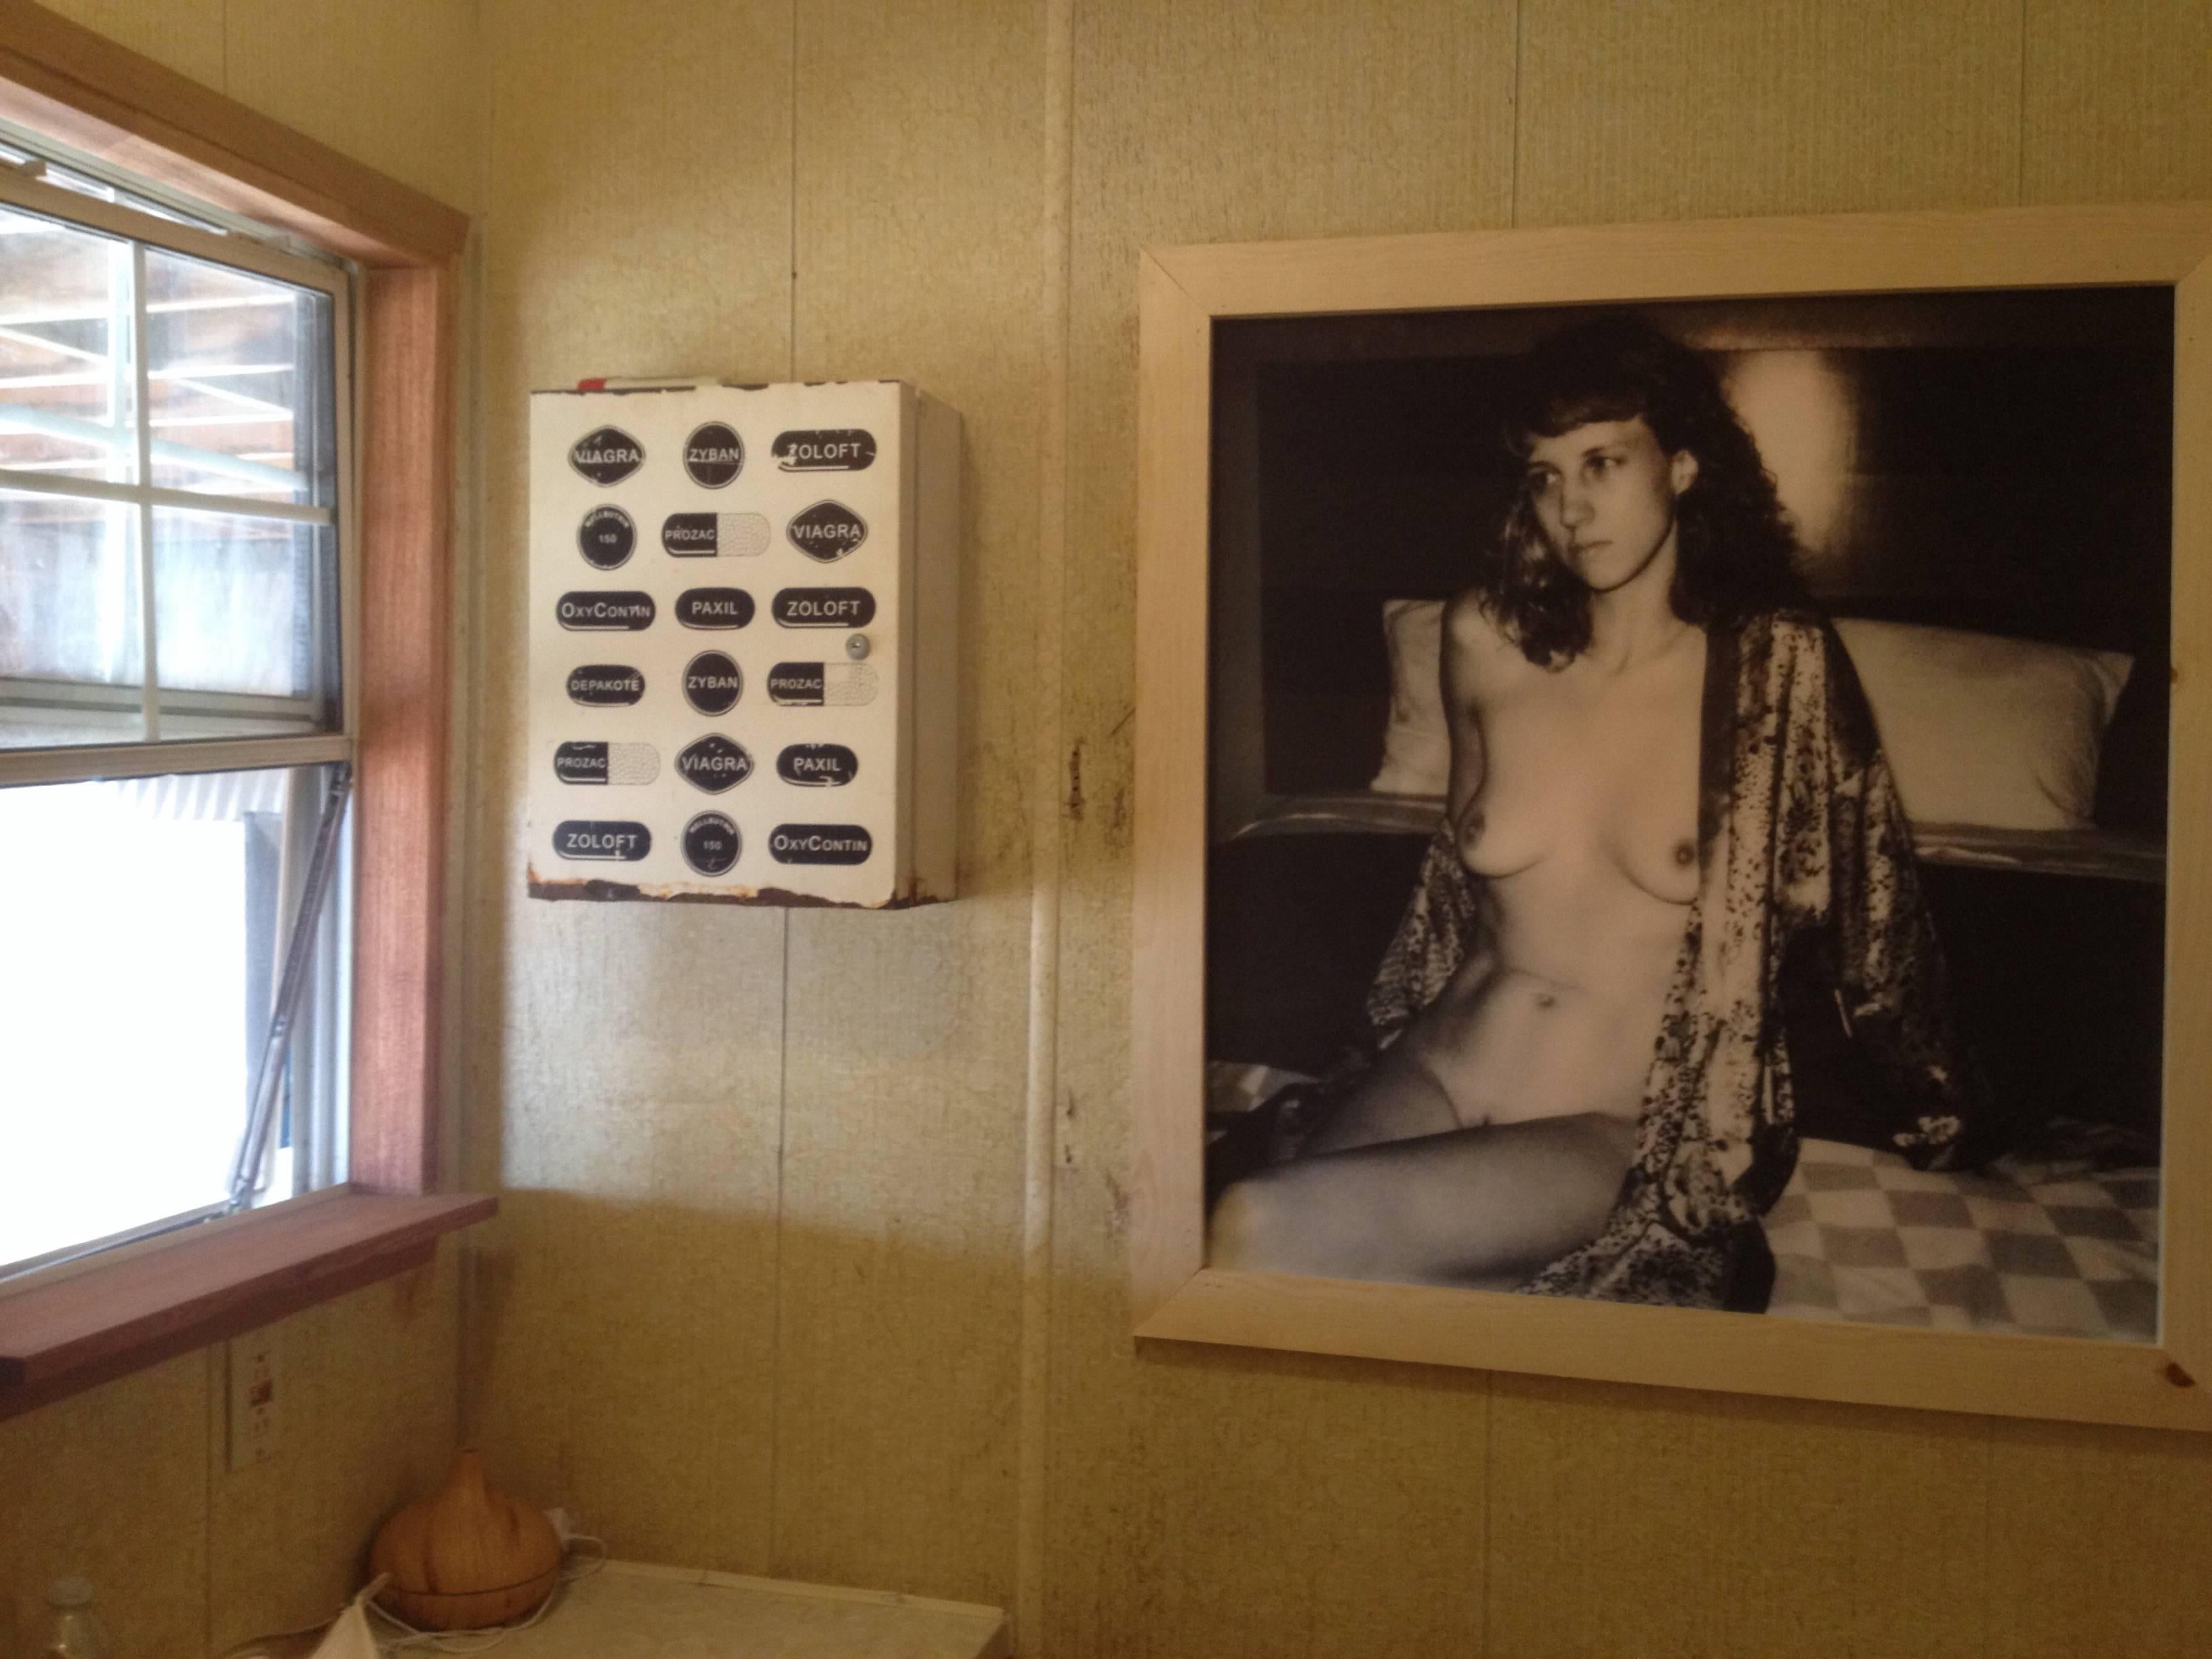 Day and Night (50x50cm) - Contemporary, Nude, Women, Polaroid, 21st Century - Black Black and White Photograph by Kirsten Thys van den Audenaerde